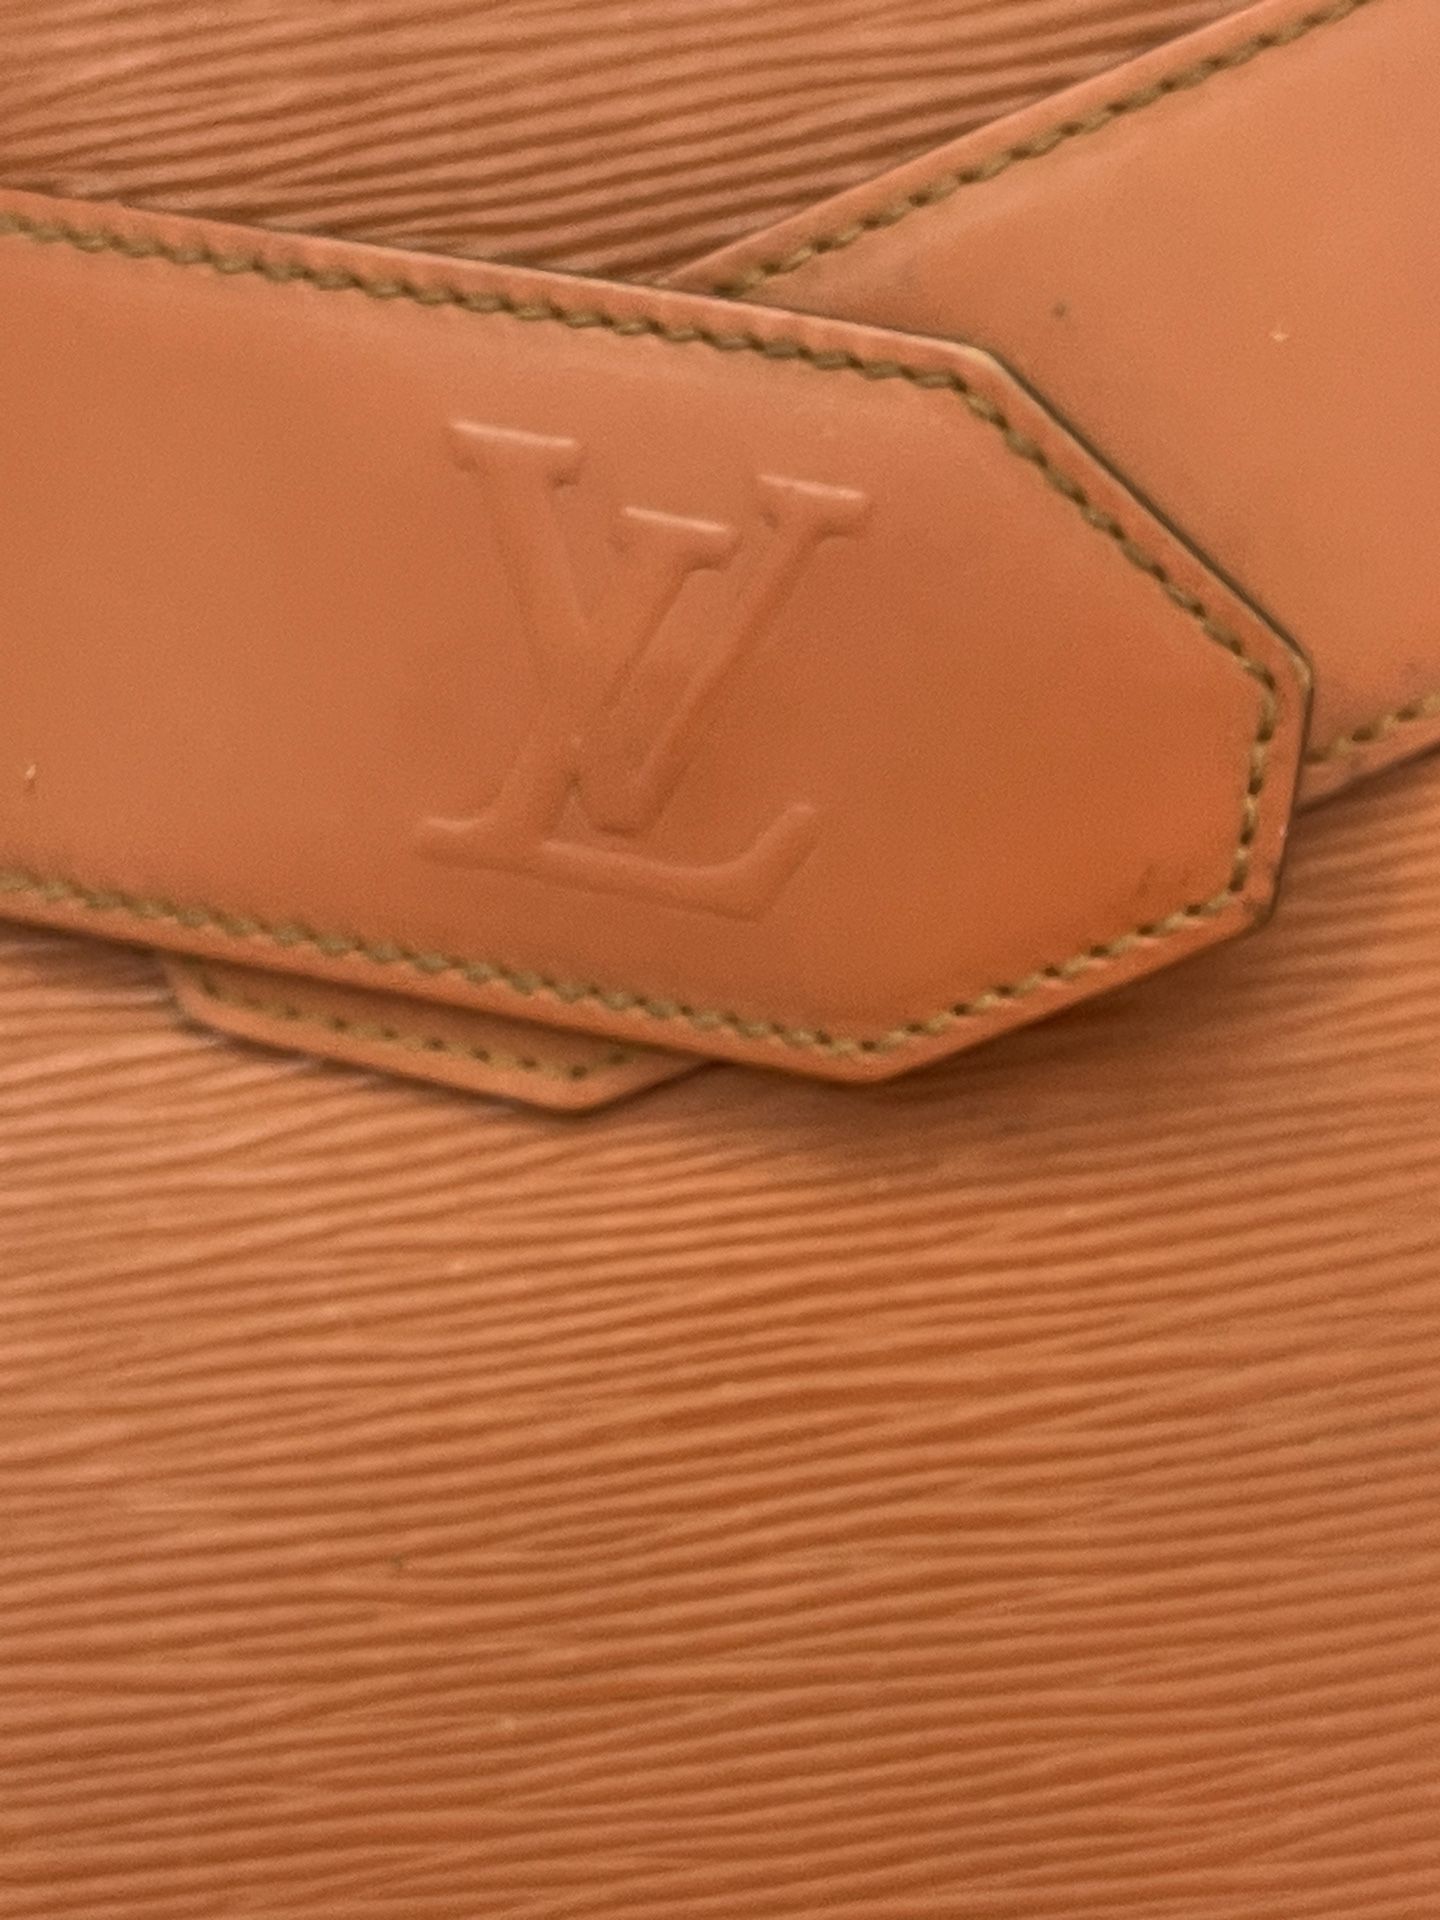 Louis Vuitton 3 Piece Purse for Sale in Miami, FL - OfferUp